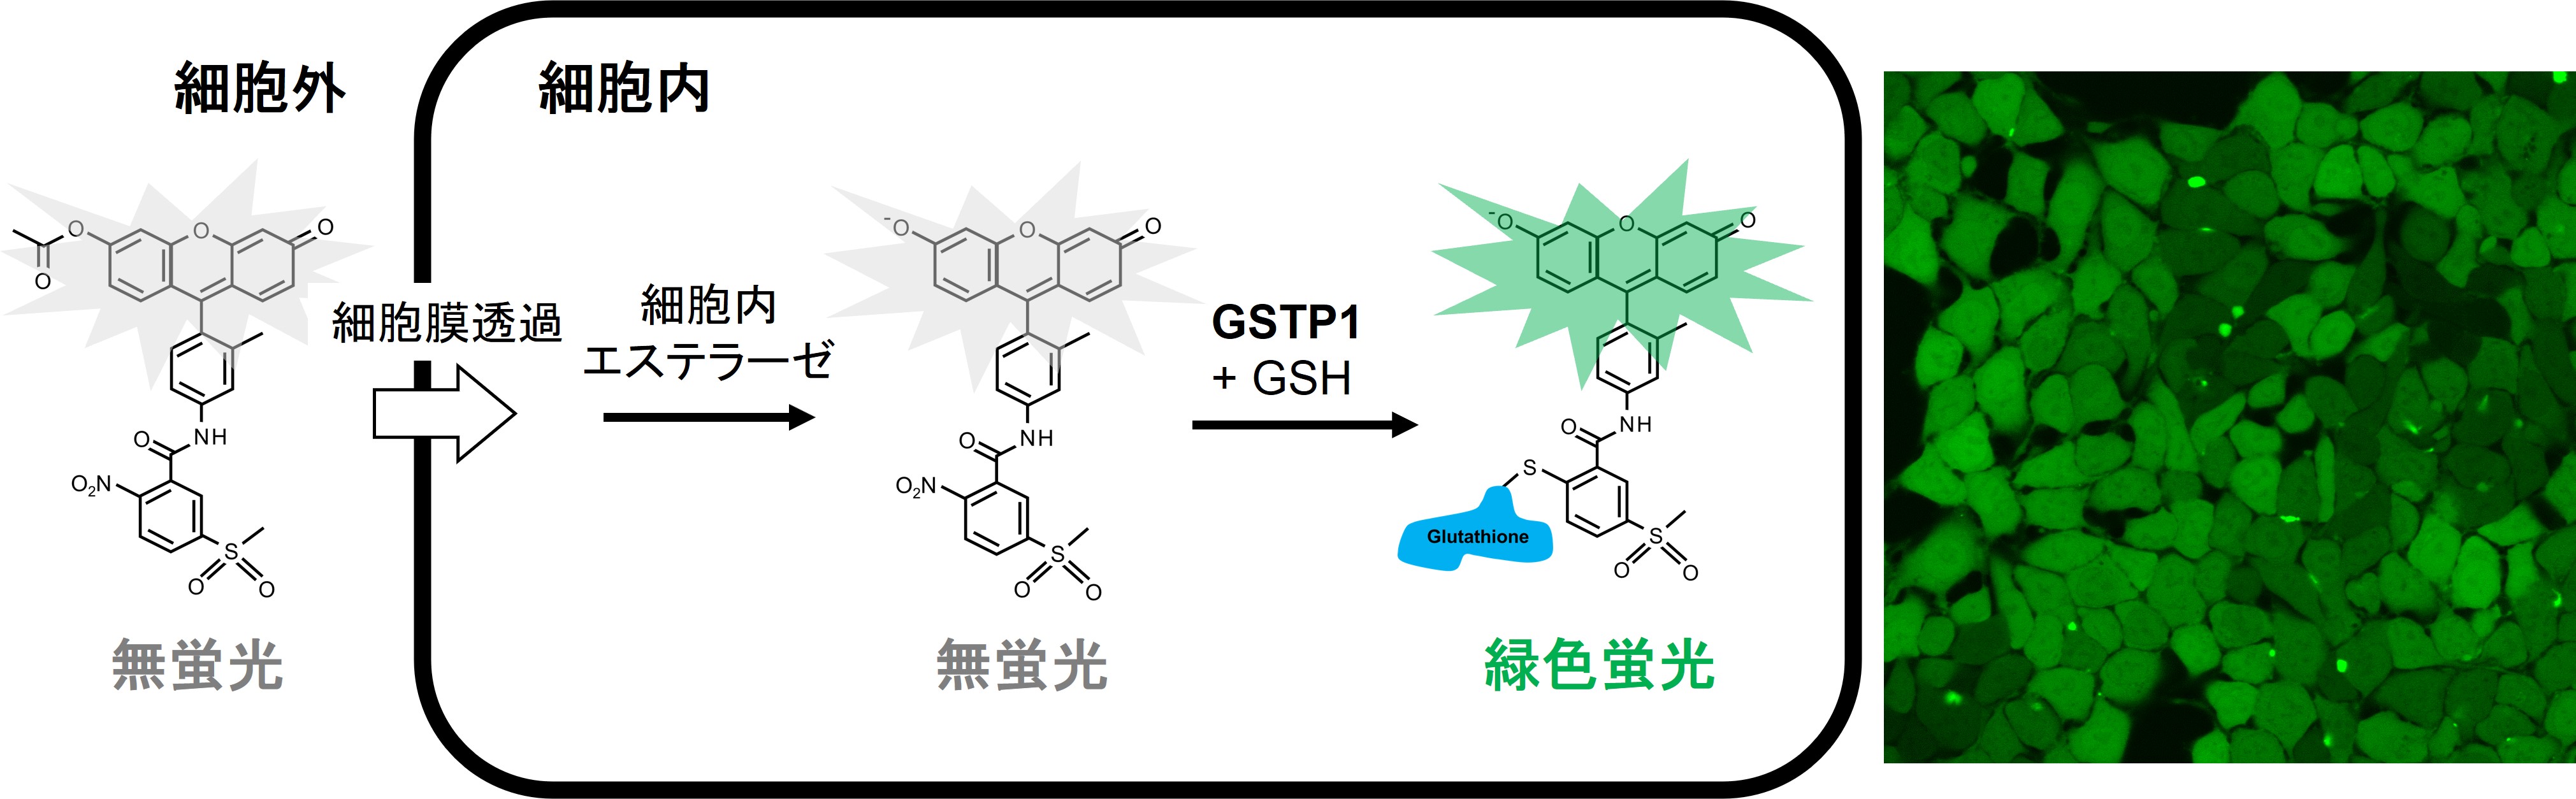 CellFluor GSTP1による生細胞内のGSTP1酵素活性測定